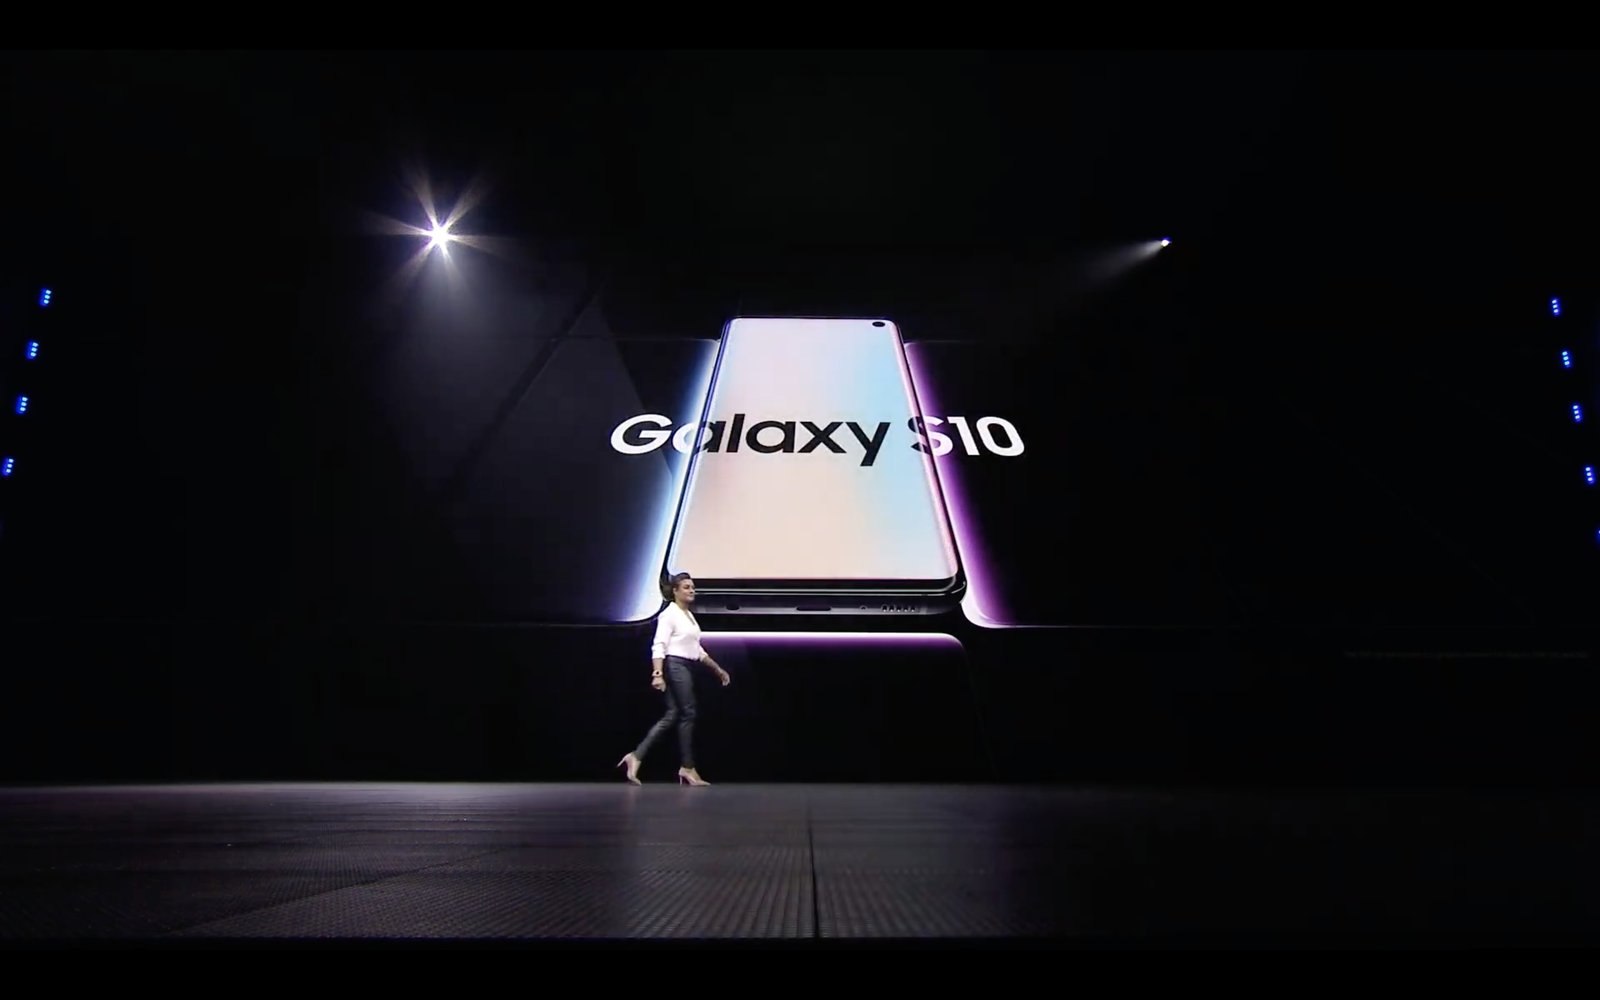 Unpacking the Samsung Galaxy S10+